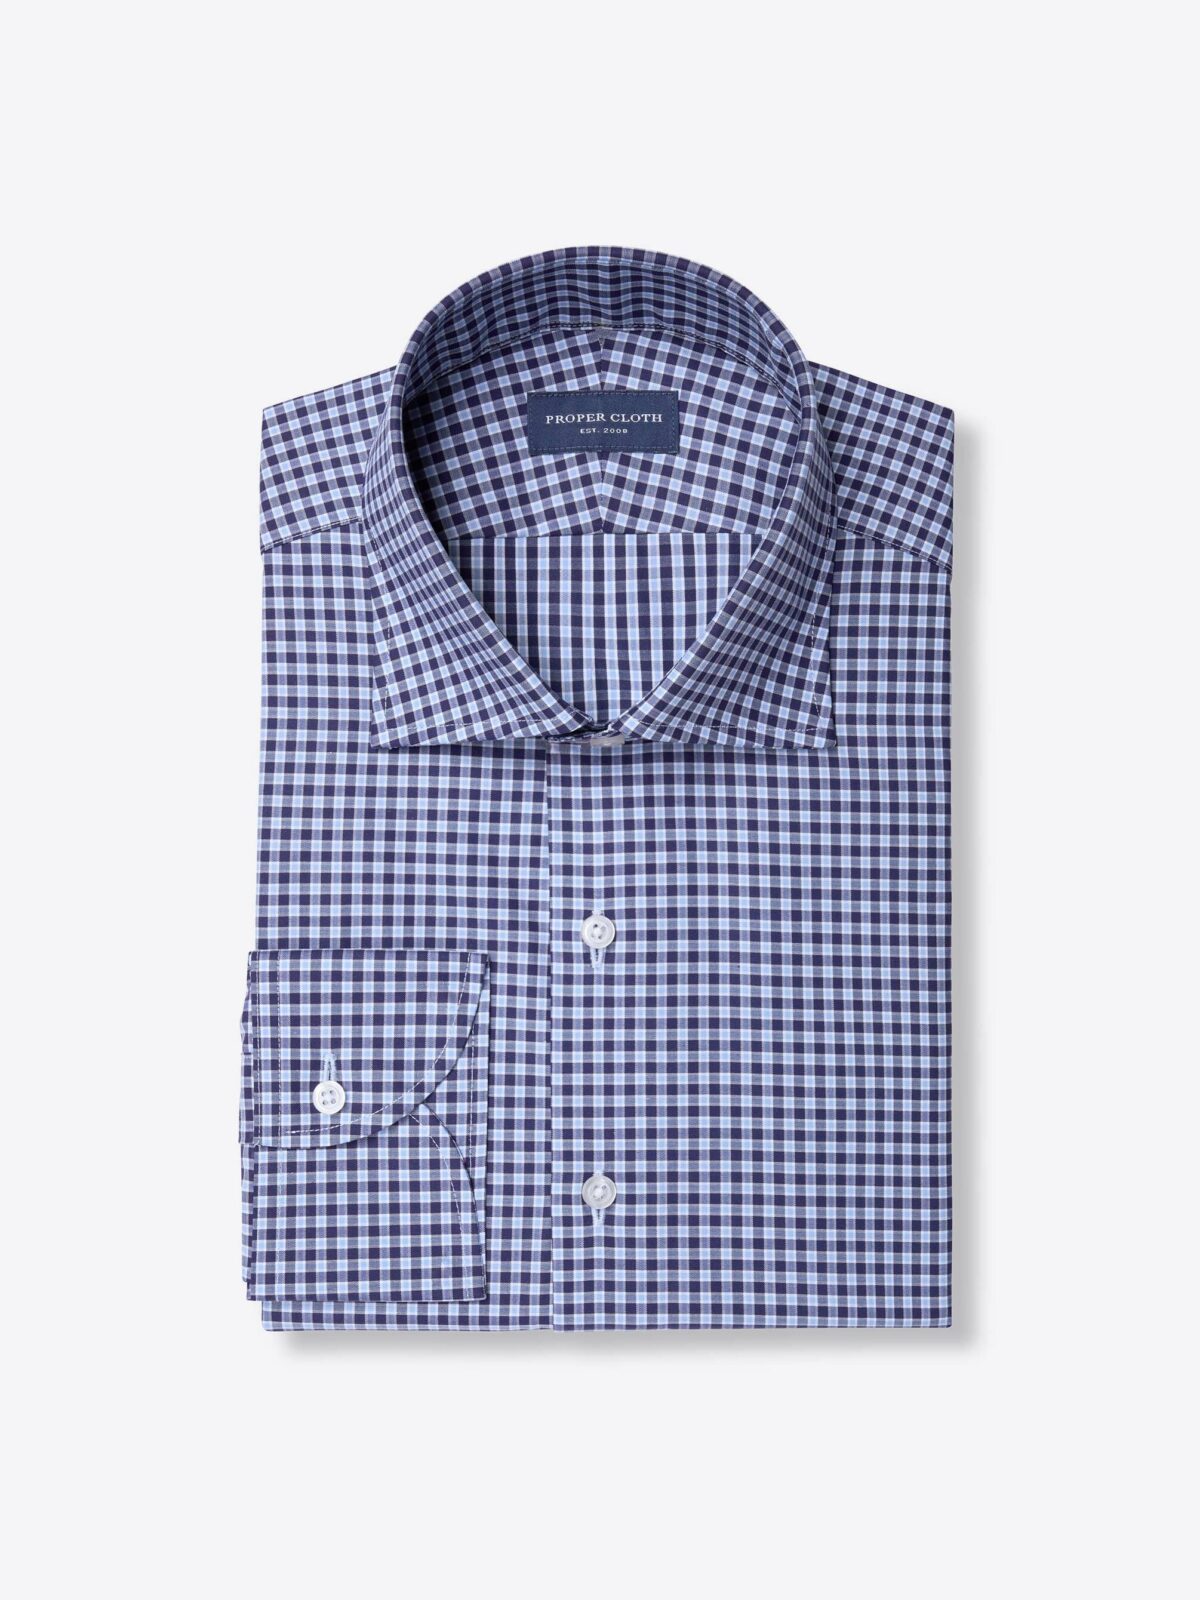 Thomas Mason Navy and Light Blue Check Twill Shirt by Proper Cloth